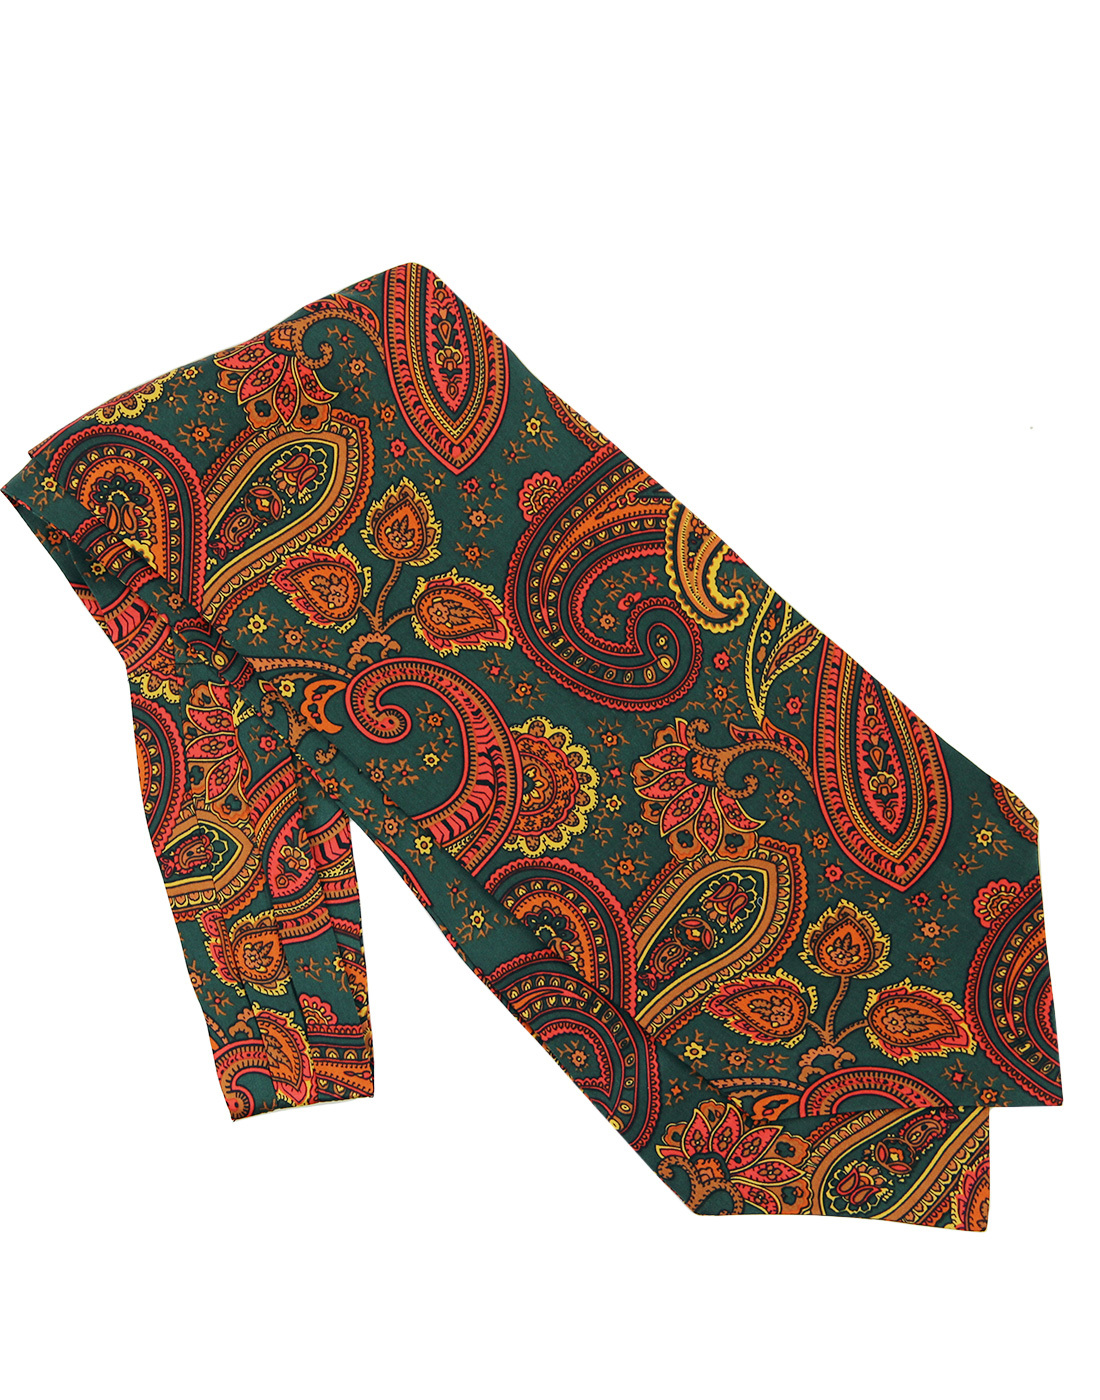 TOOTAL Sixties Mod Floral Paisley Silk Cravat